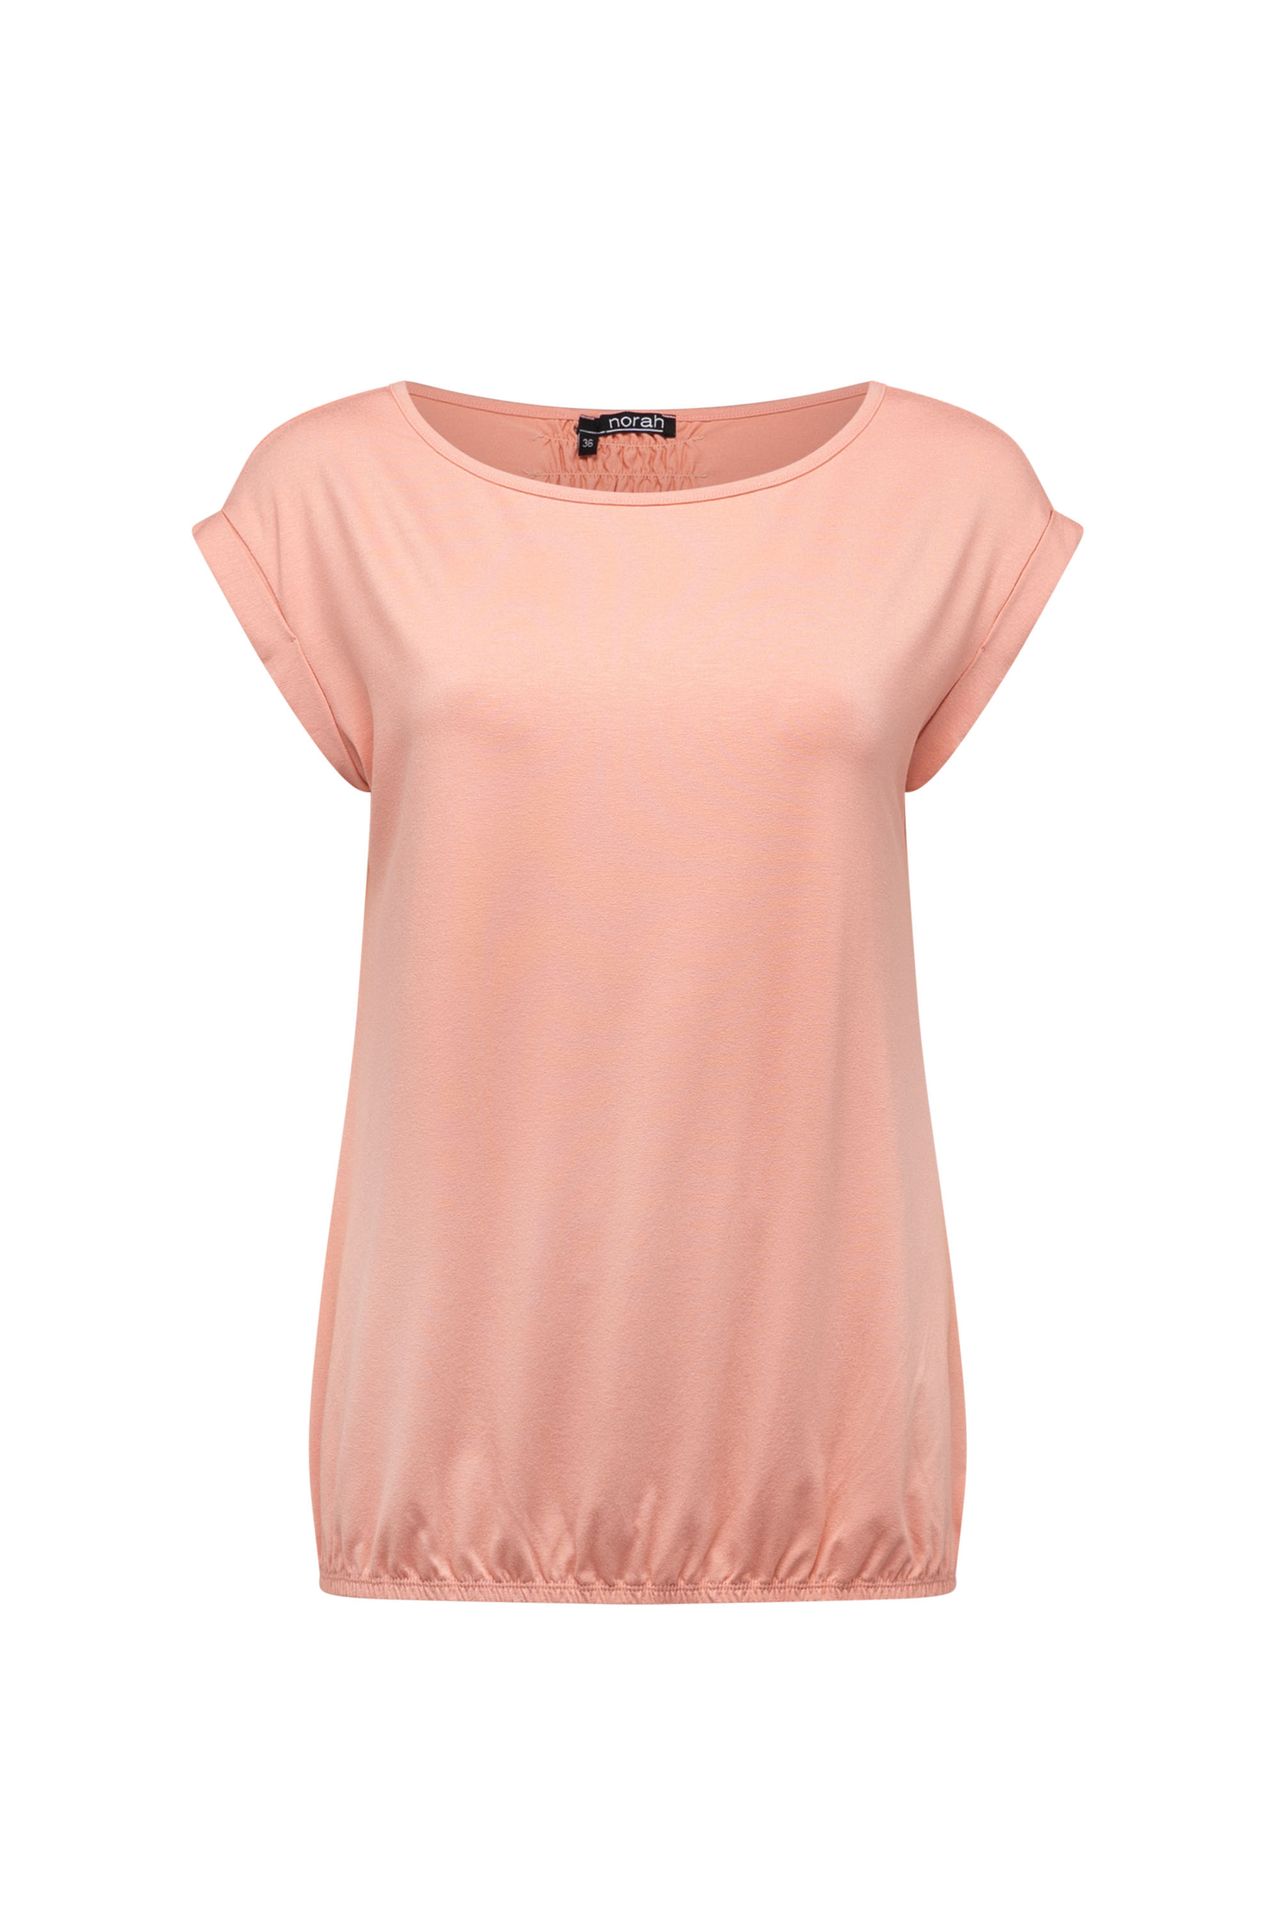 Norah Shirt Marije pastelroze blush 203656-905